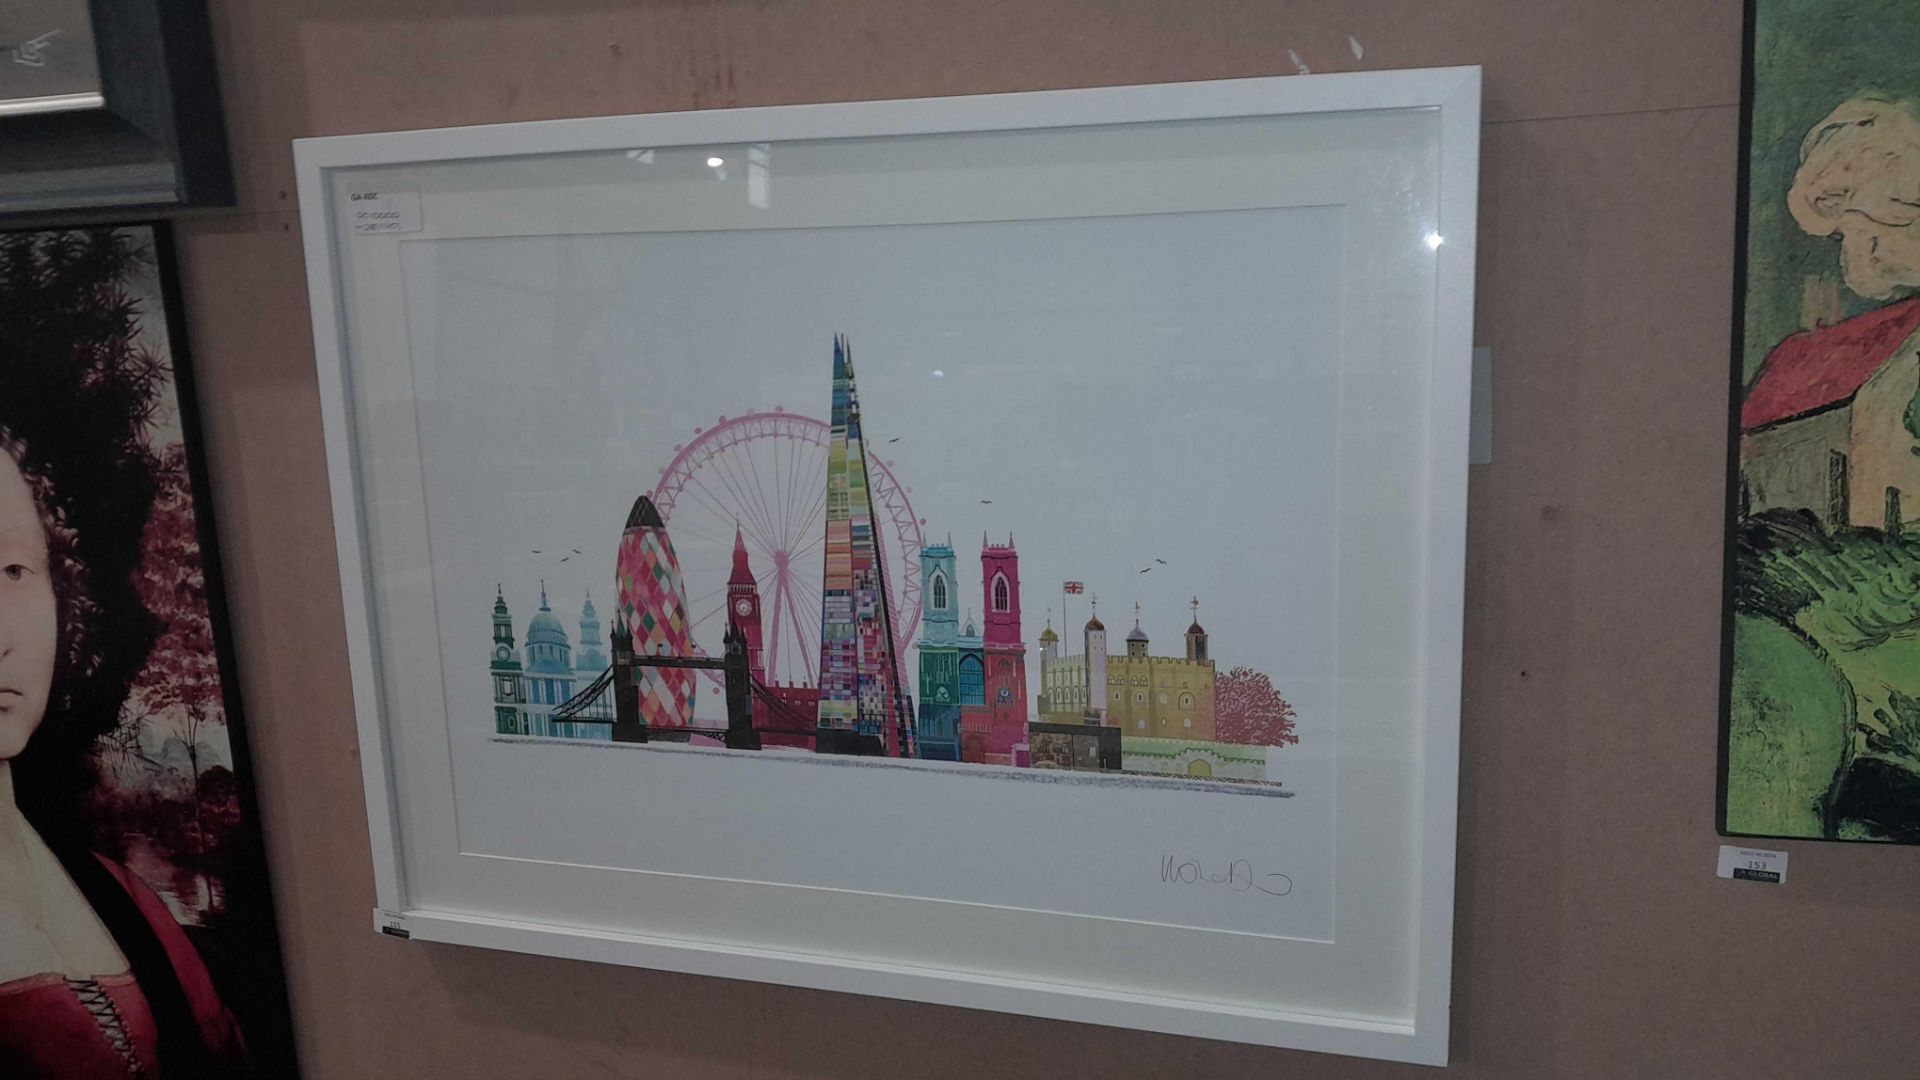 RRP £100 Ilona Drew - London Skyline Framed Print, 27.5 X 33.5Cm - Image 2 of 2